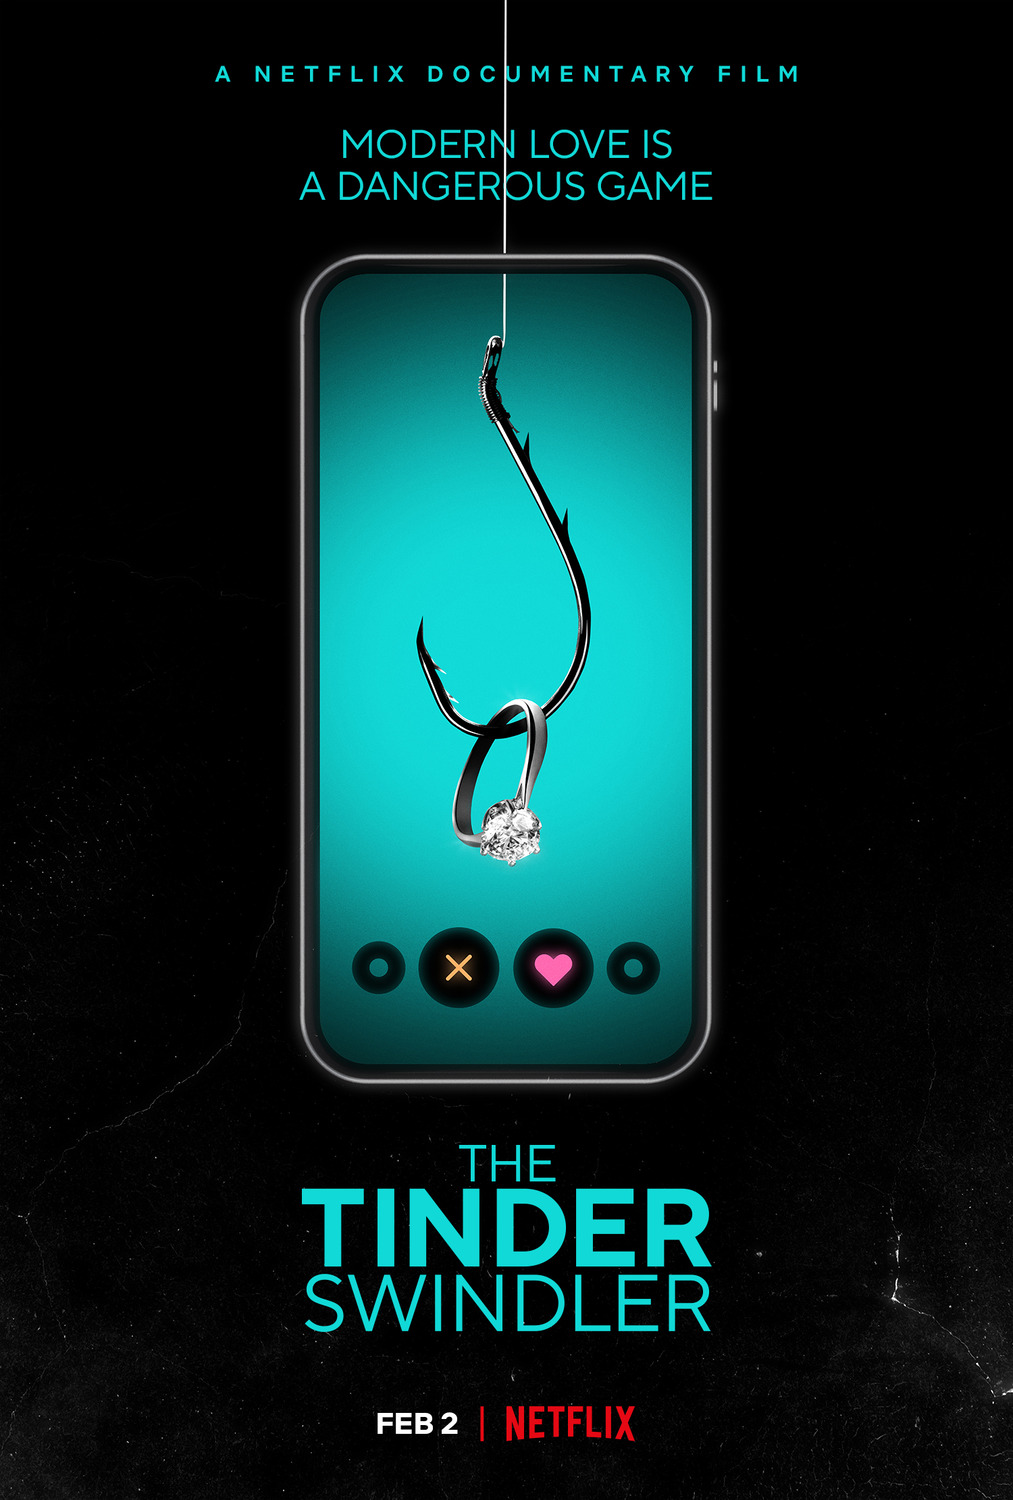 How safe is Tinder? : The Insane “Tinder Swindler” is real